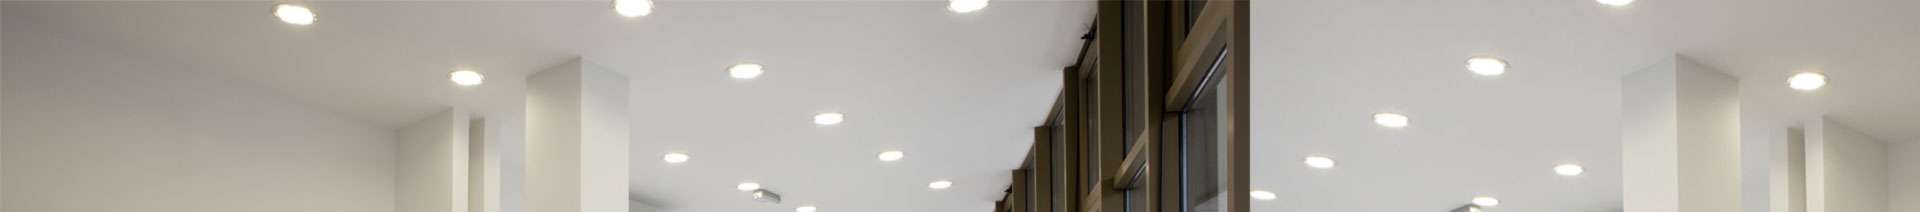 Categoria de Produto:Downlight LED - Iluctron LED Technology